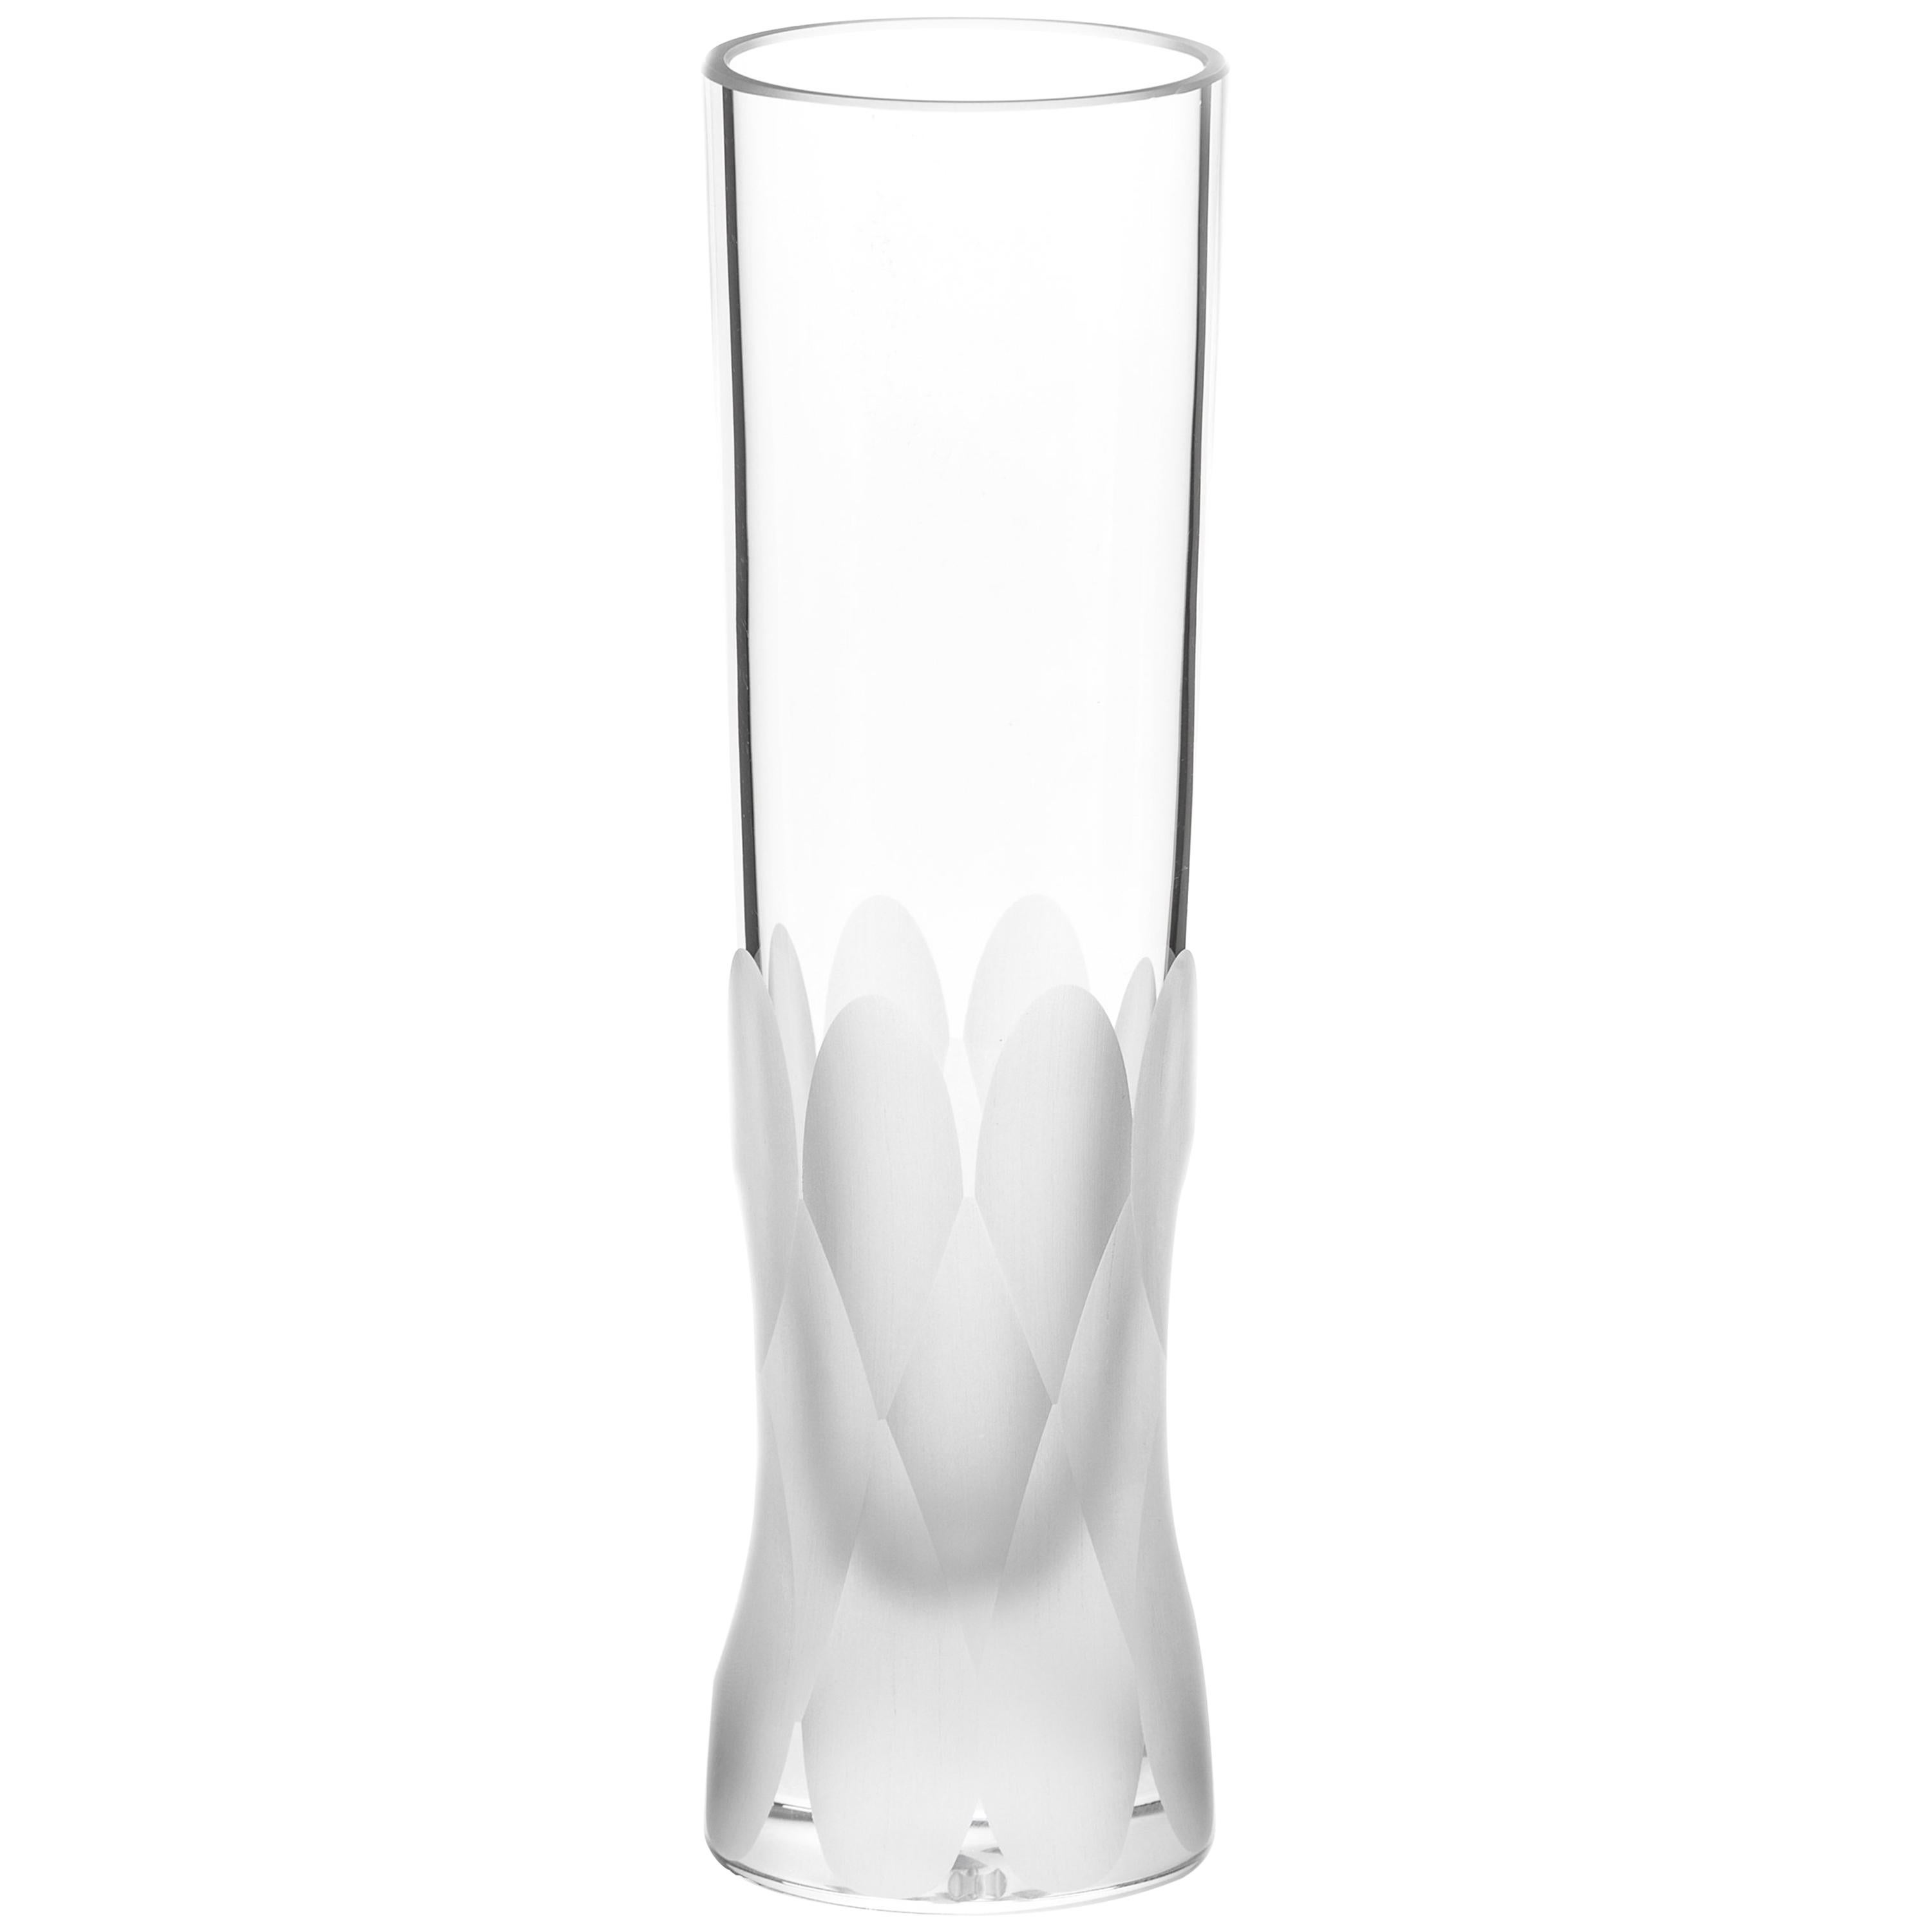 Martino Gamper Handmade Irish Crystal Champagne Glass 'Cuttings' Series x 2 For Sale